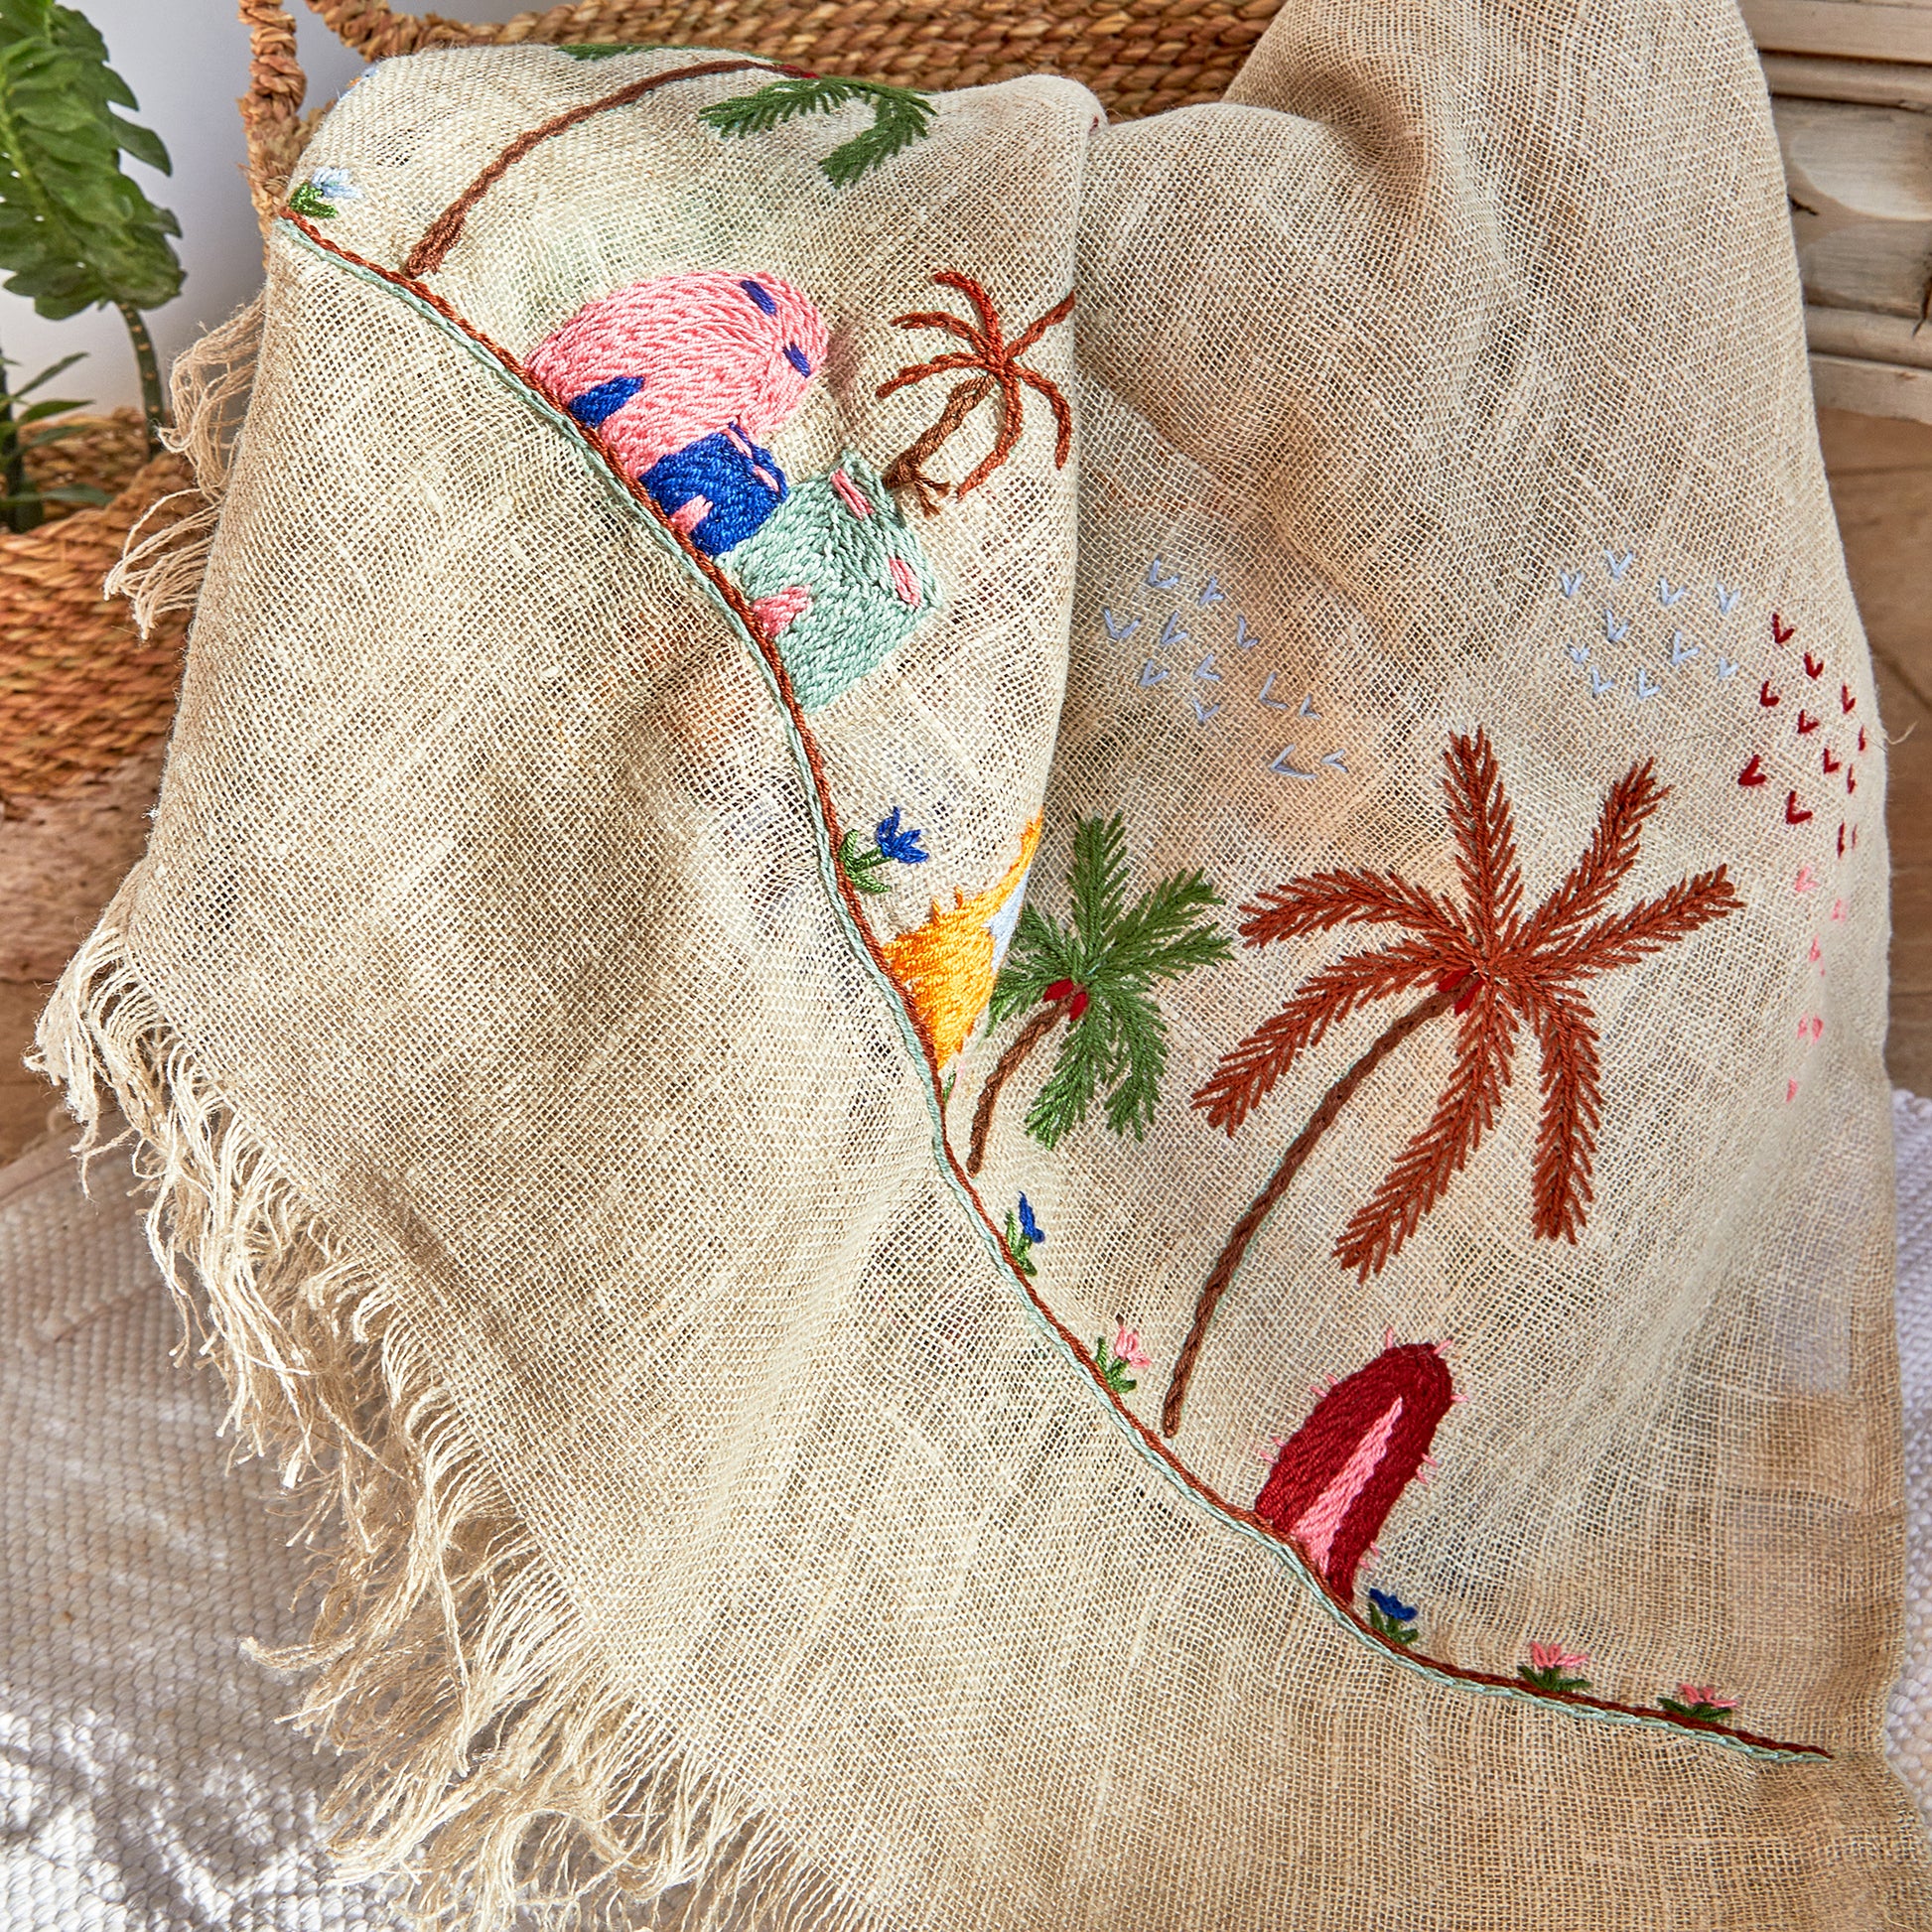 Rustic embroidered linen shawl. شال كتان مطرز ريفي